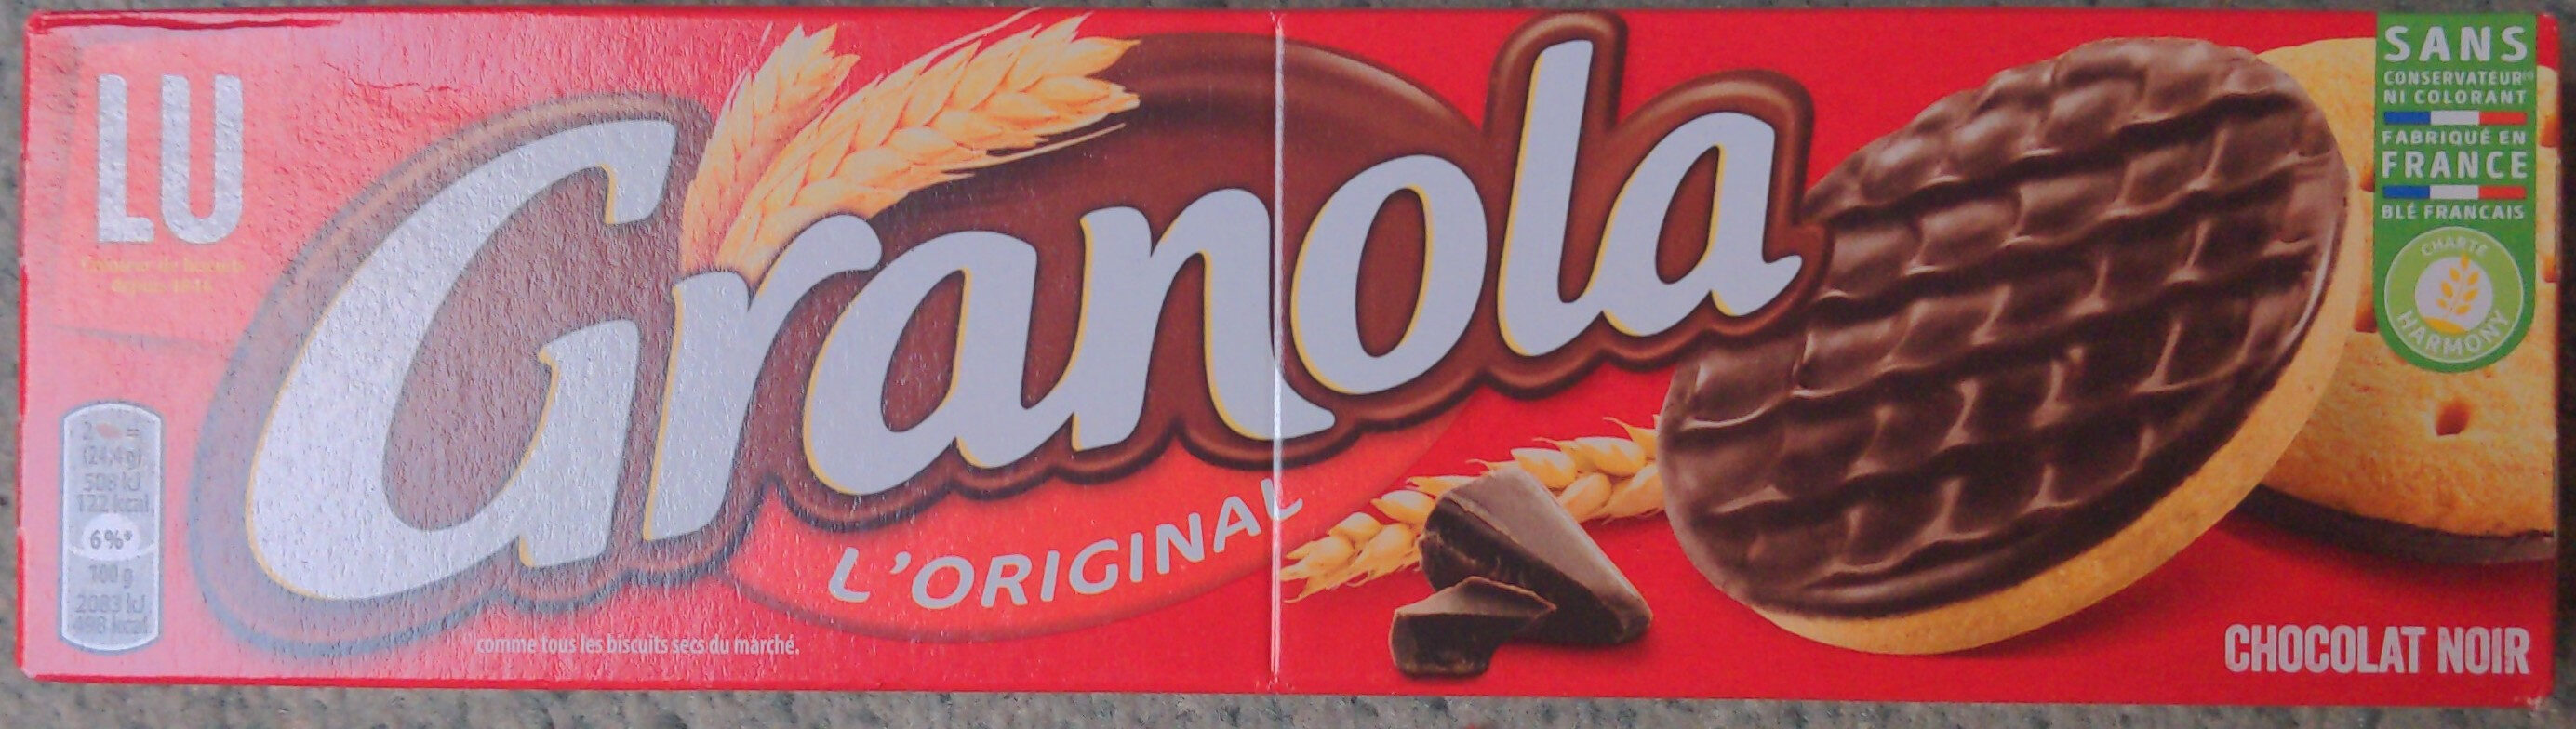 Granola Chocolat Noir - Produit